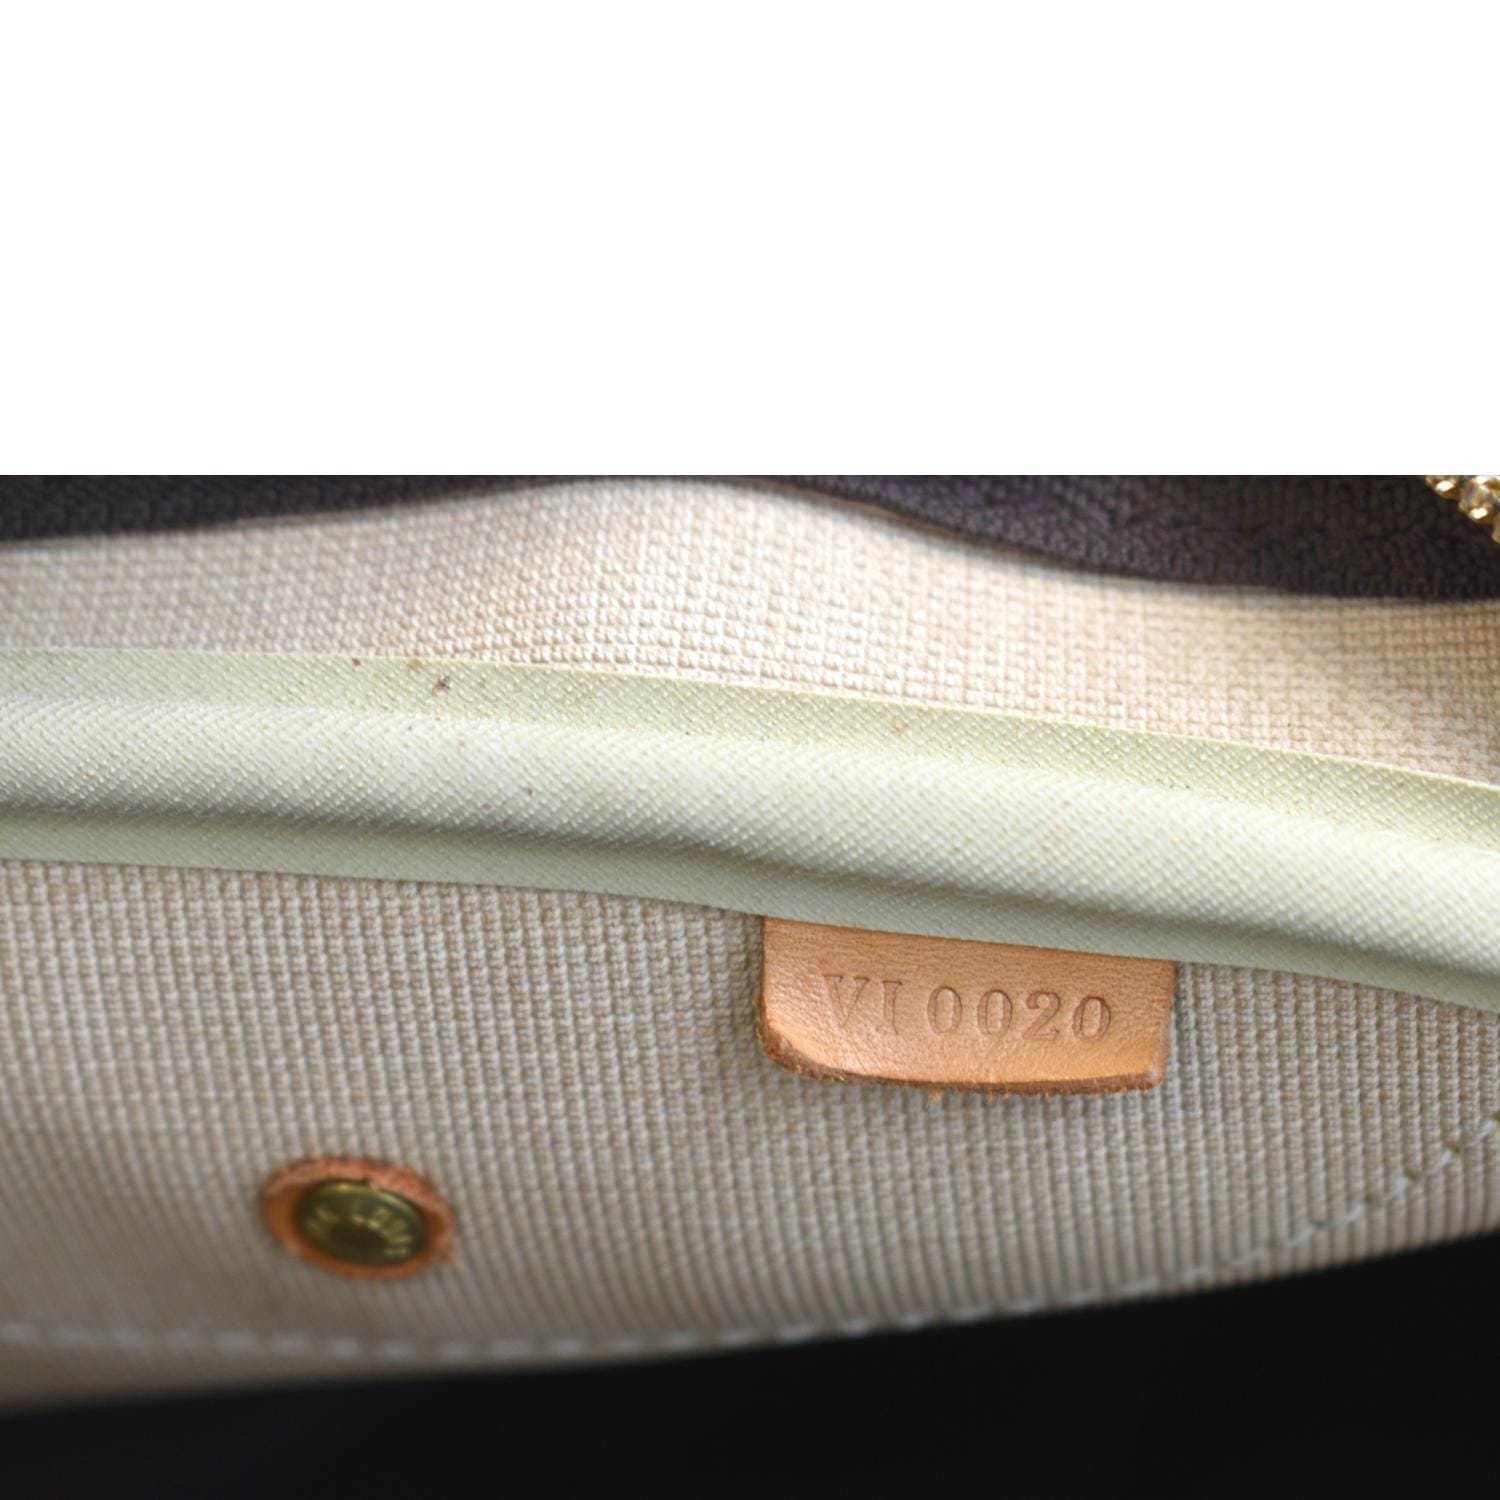 Louis Vuitton Evasion Boston Travel Bag – Timeless Vintage Company